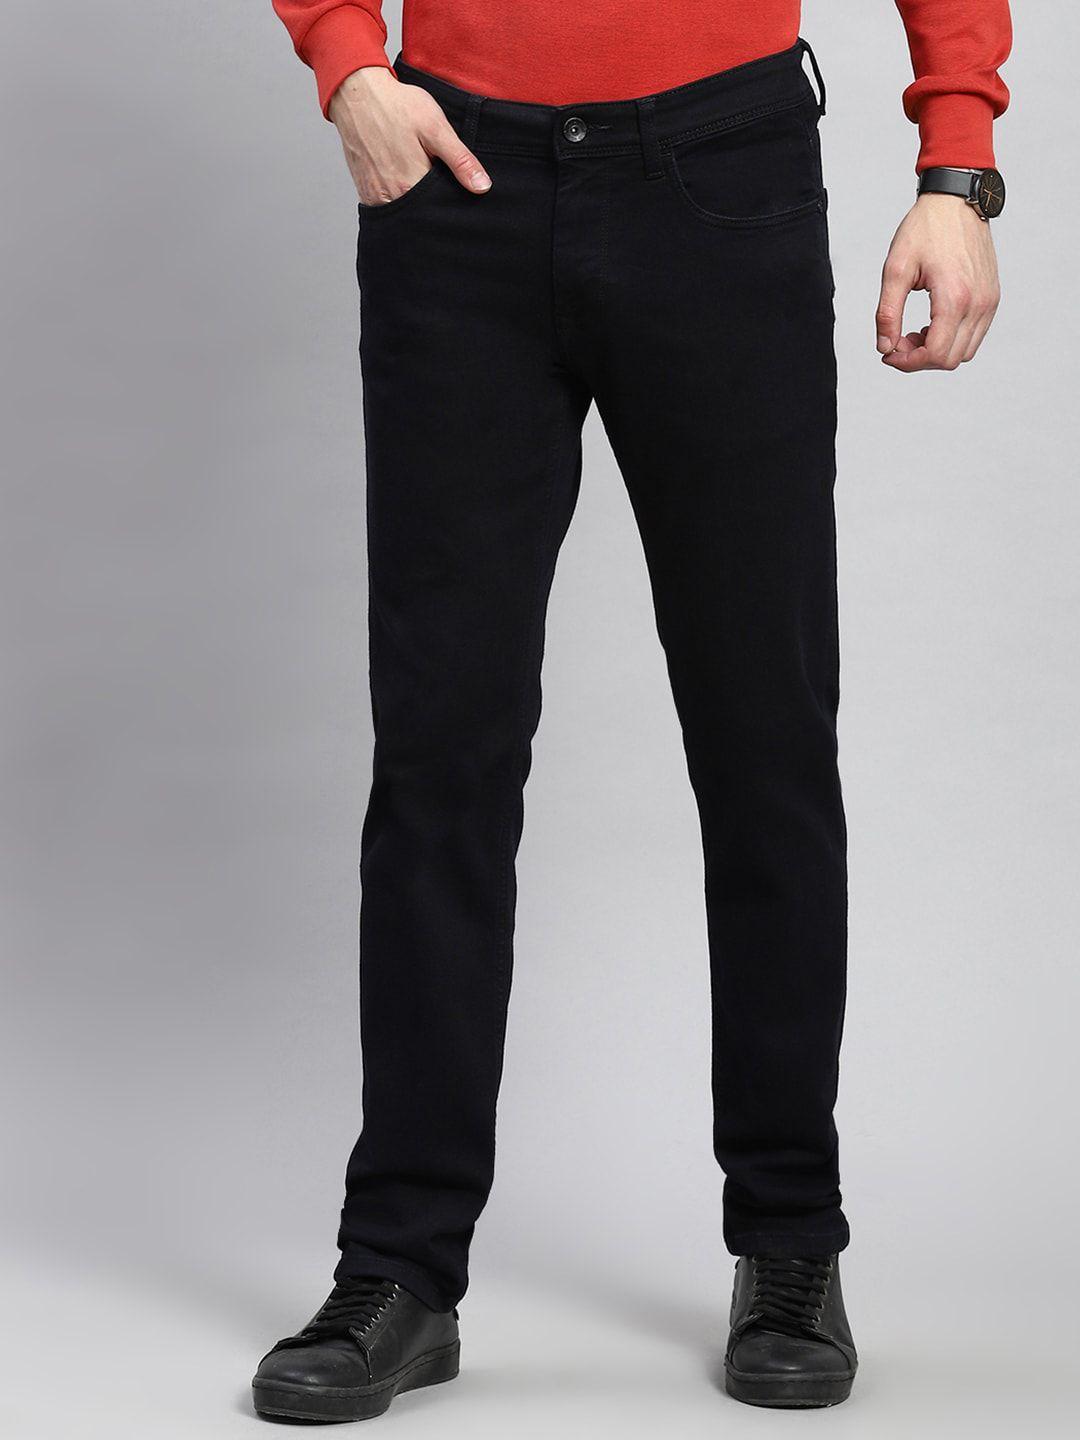 monte-carlo-men-narrow-mid-rise-clean-look-jeans